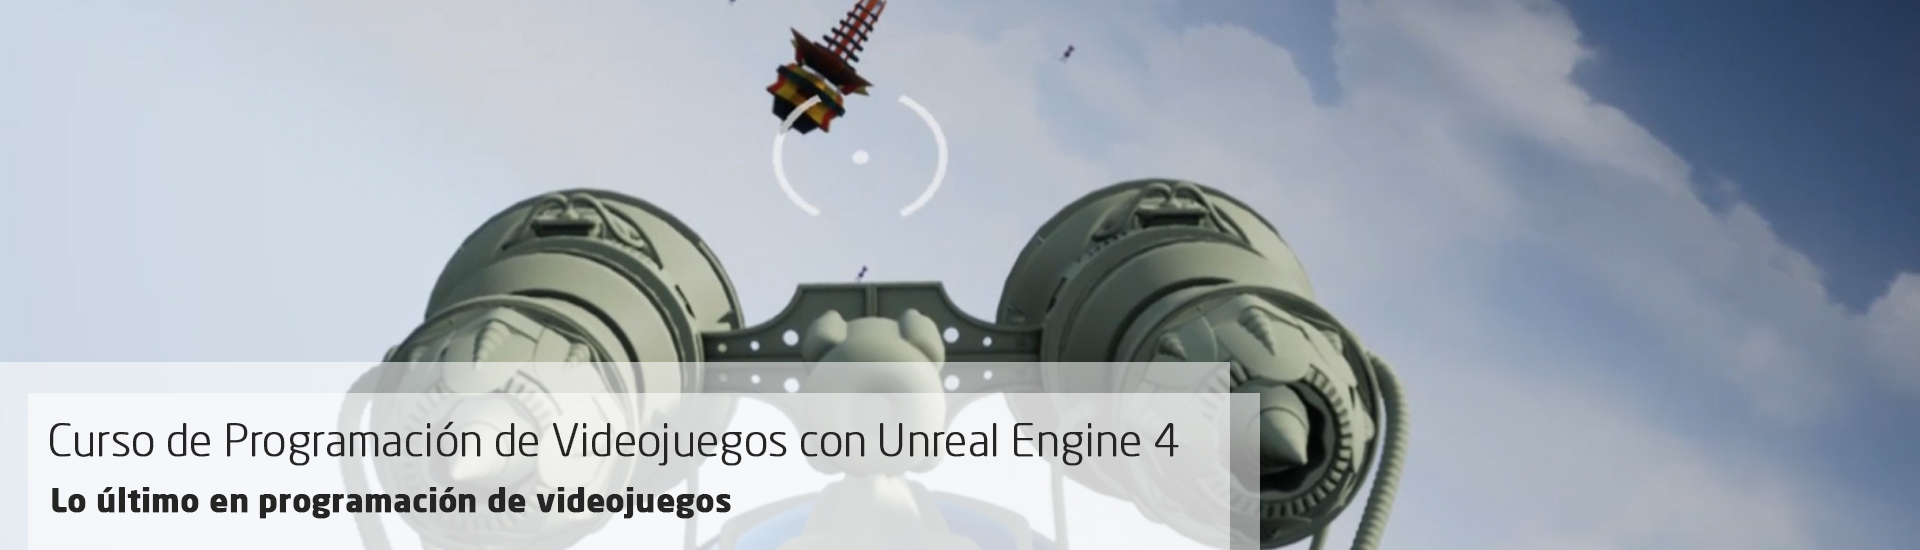 Curso de Programación de Videojuegos con Unreal Engine 4. Lo último en programación de videojuegos.